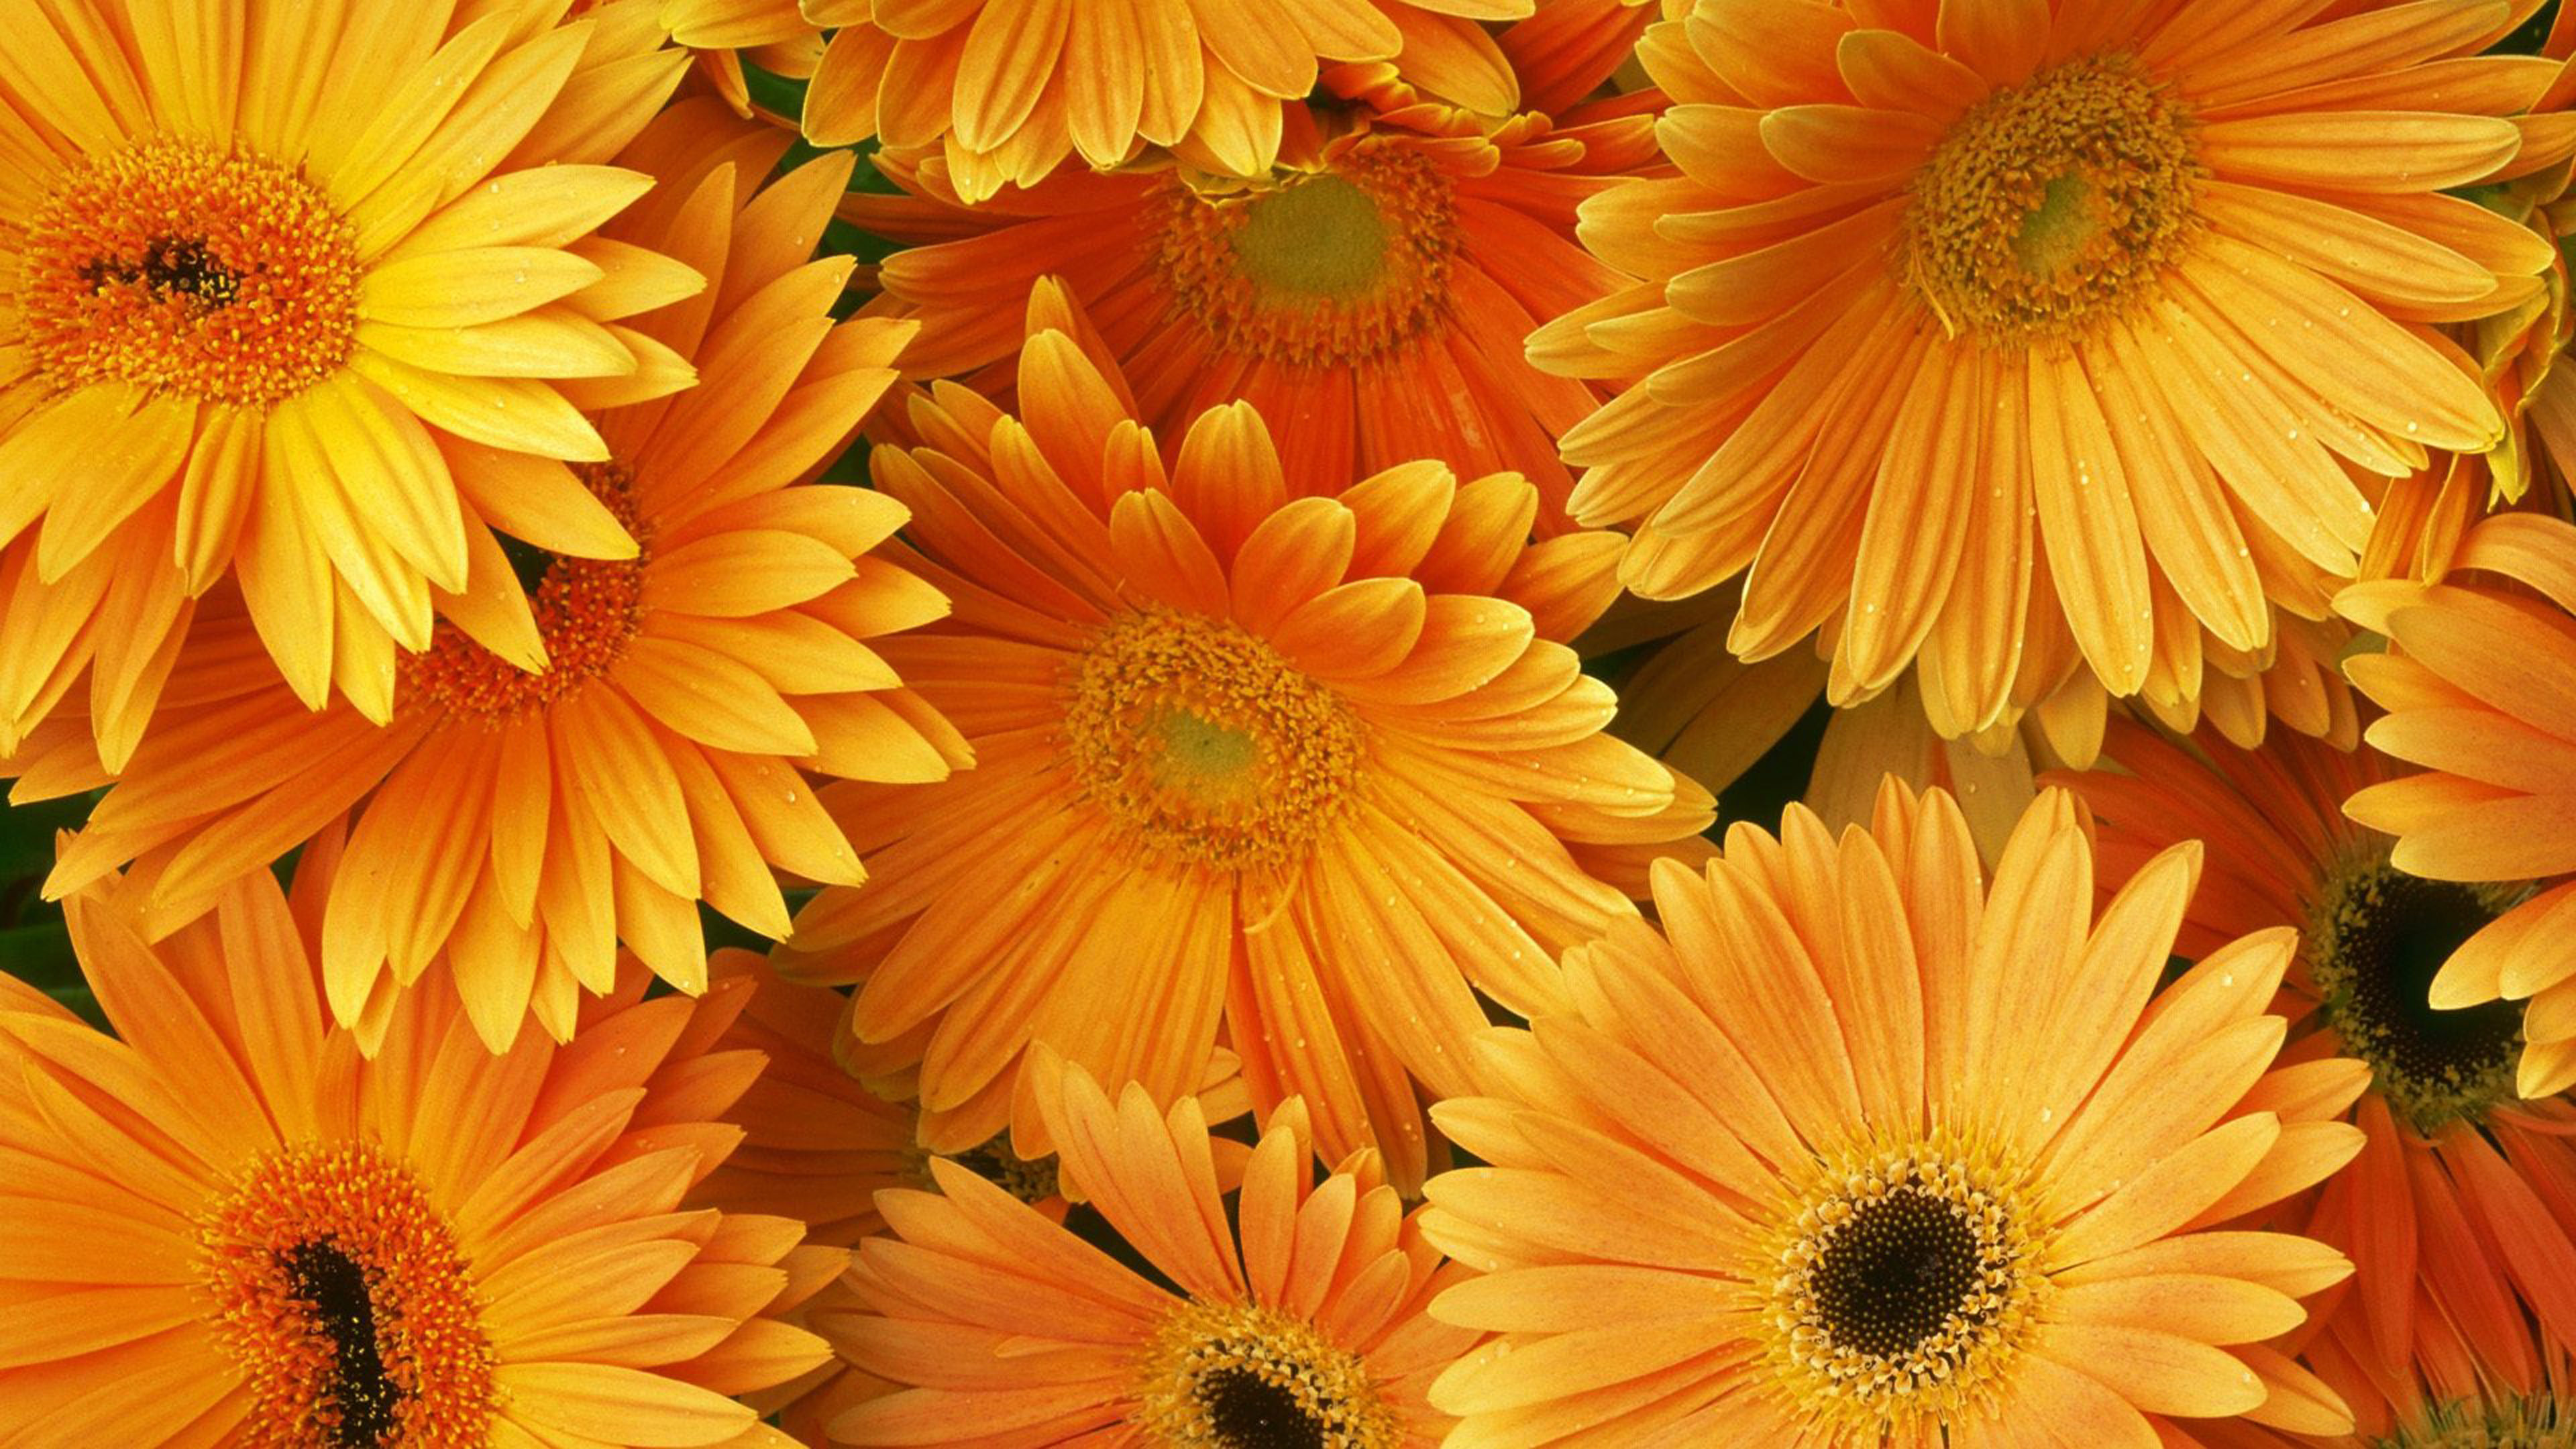 Orange Flowers Hd Desktop Backgrounds Free Download : Wallpapers13.com